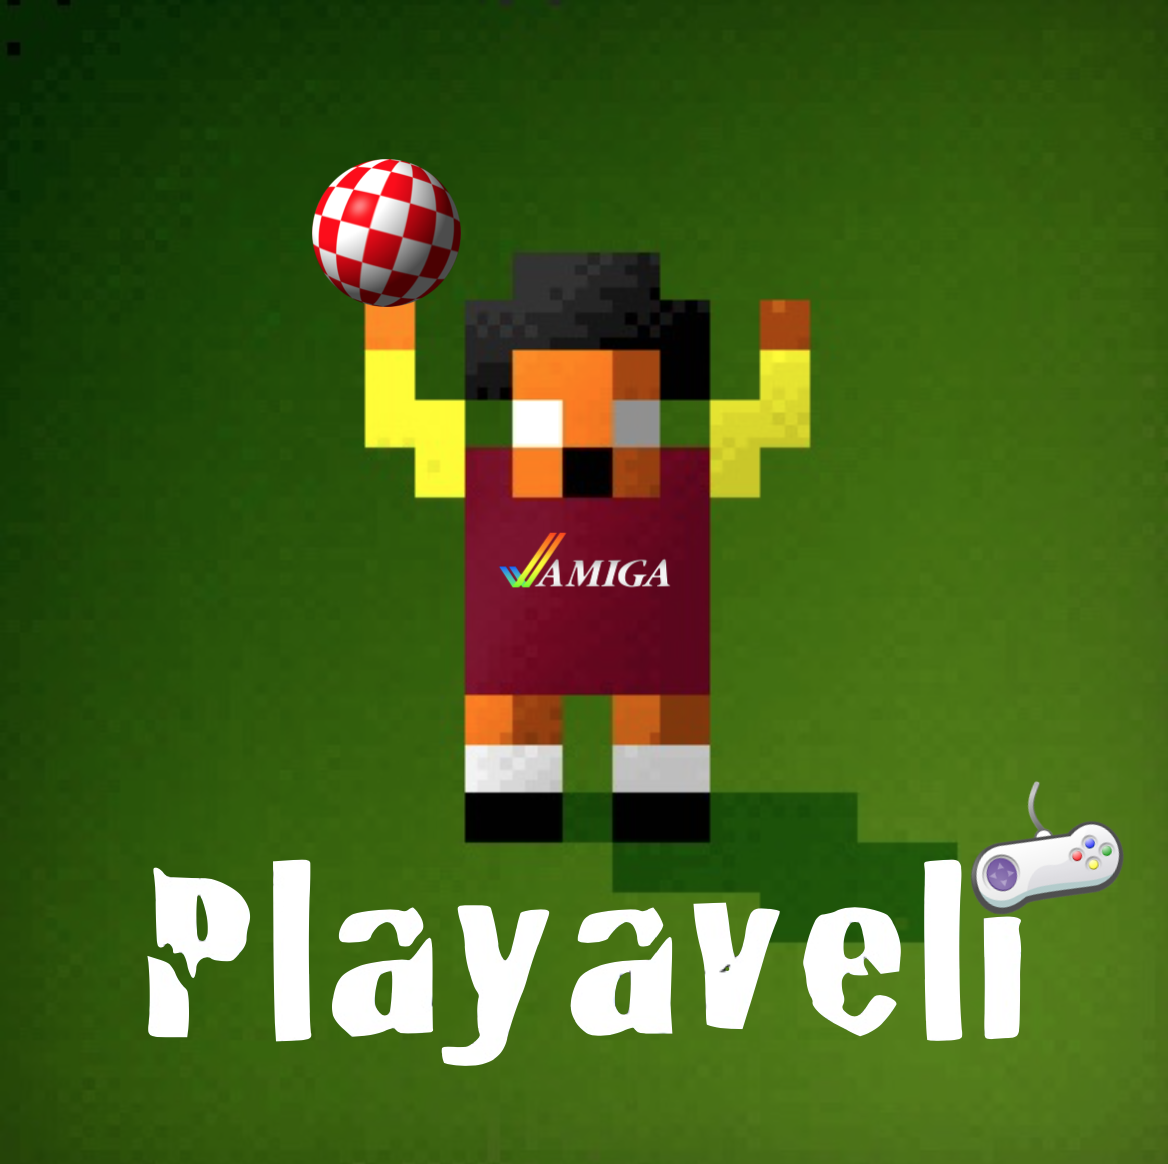 Playaveli's avatar